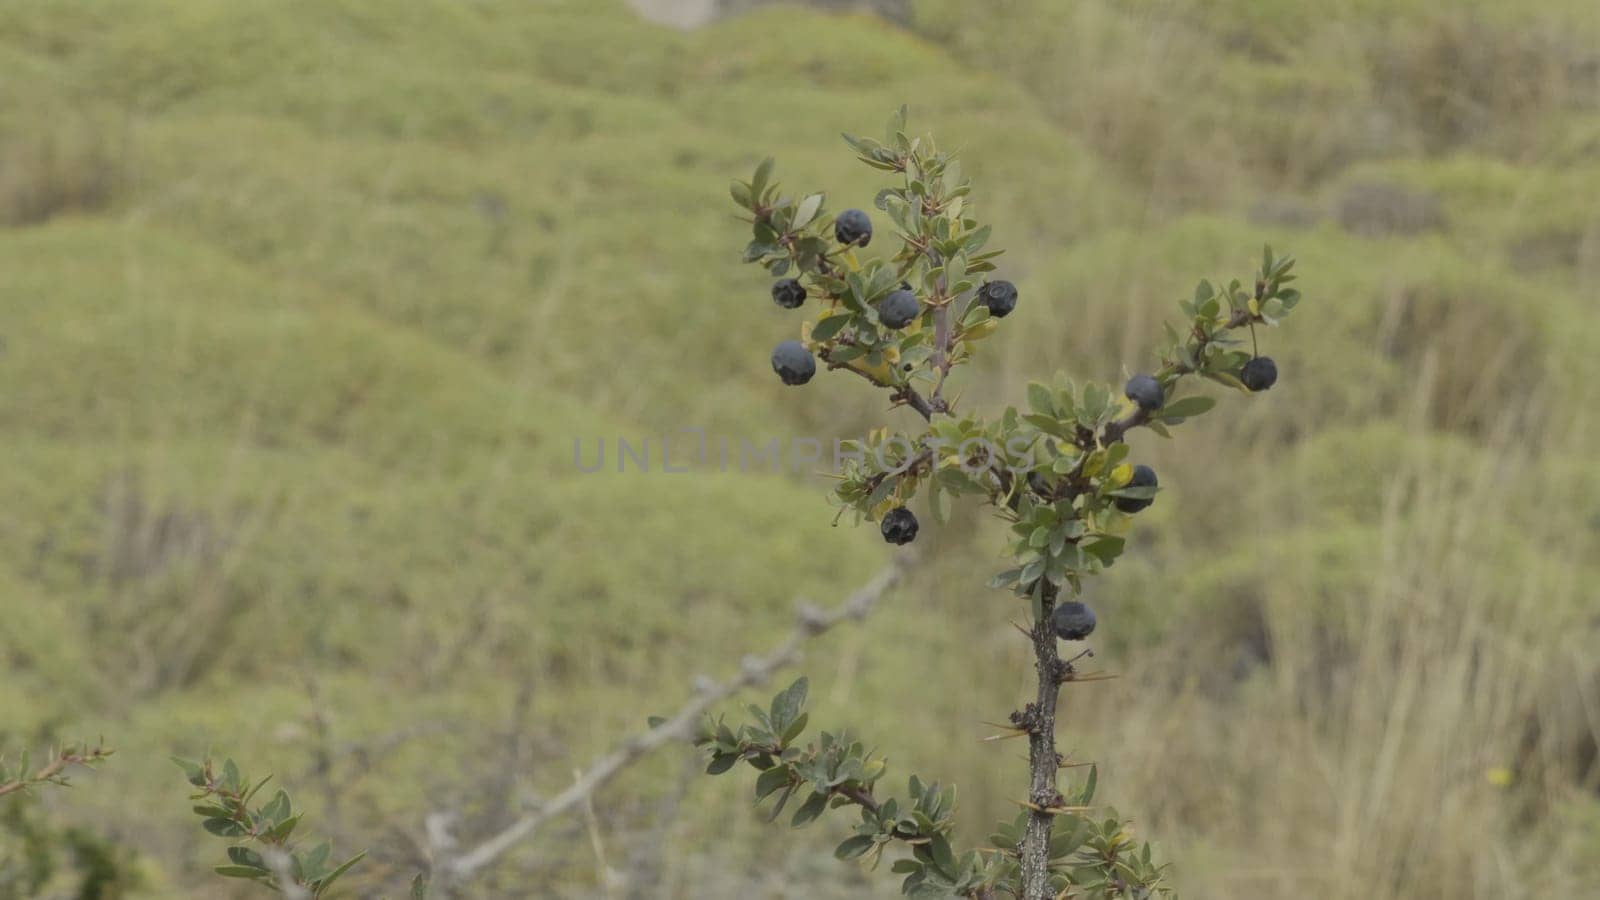 Black Calafate Berries on Tree in Soft Focus Background by FerradalFCG